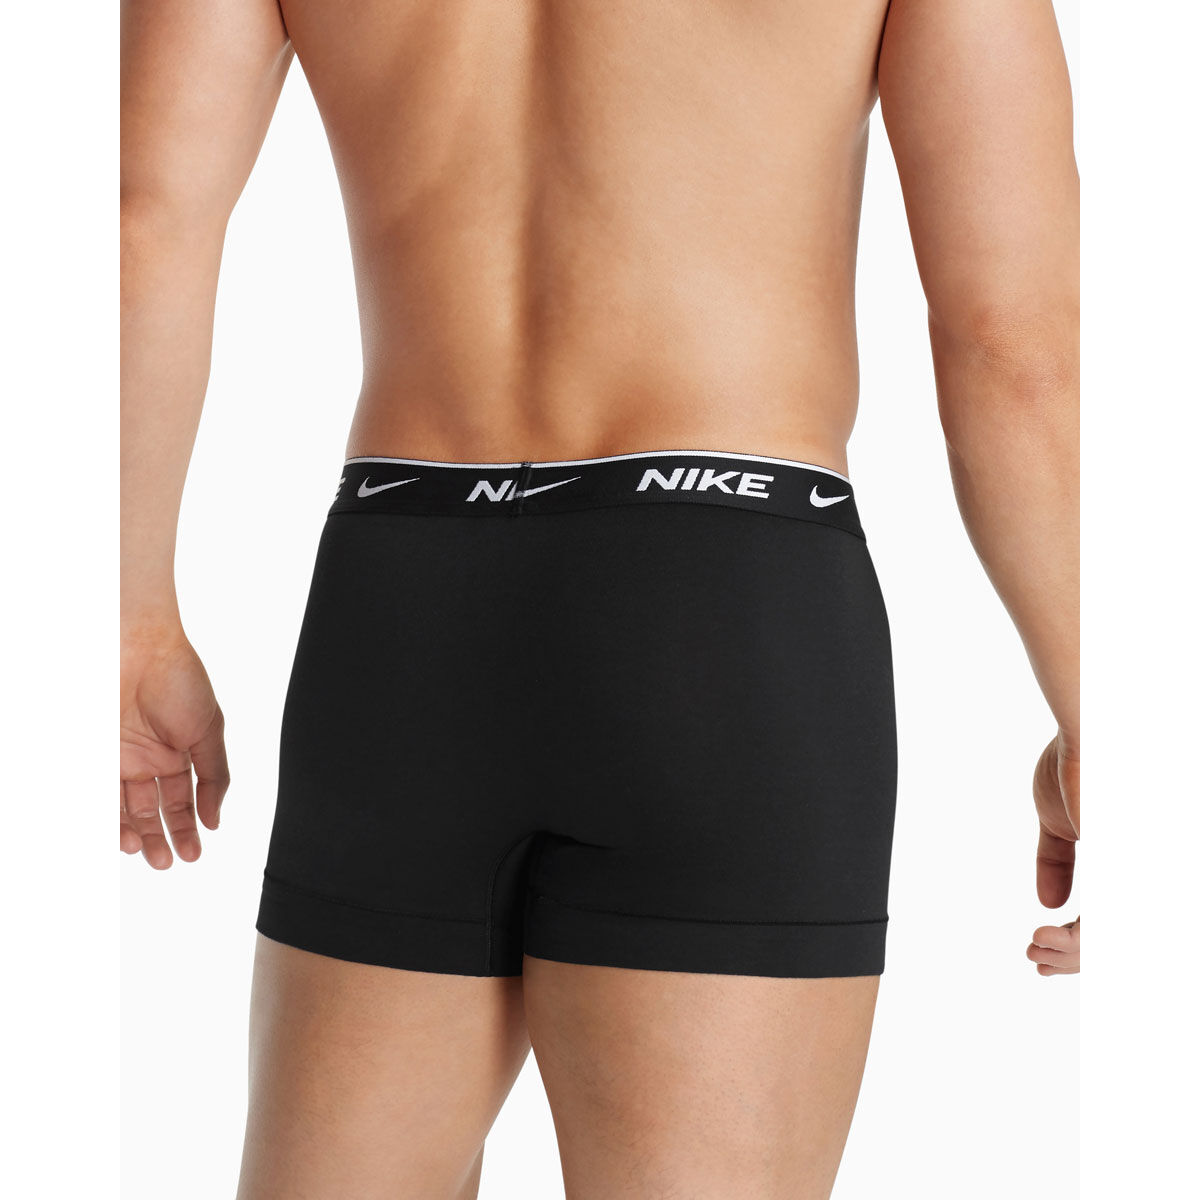 Nike Underwear Nike Everyday Cotton Stretch 3 Pack Boxer Briefs